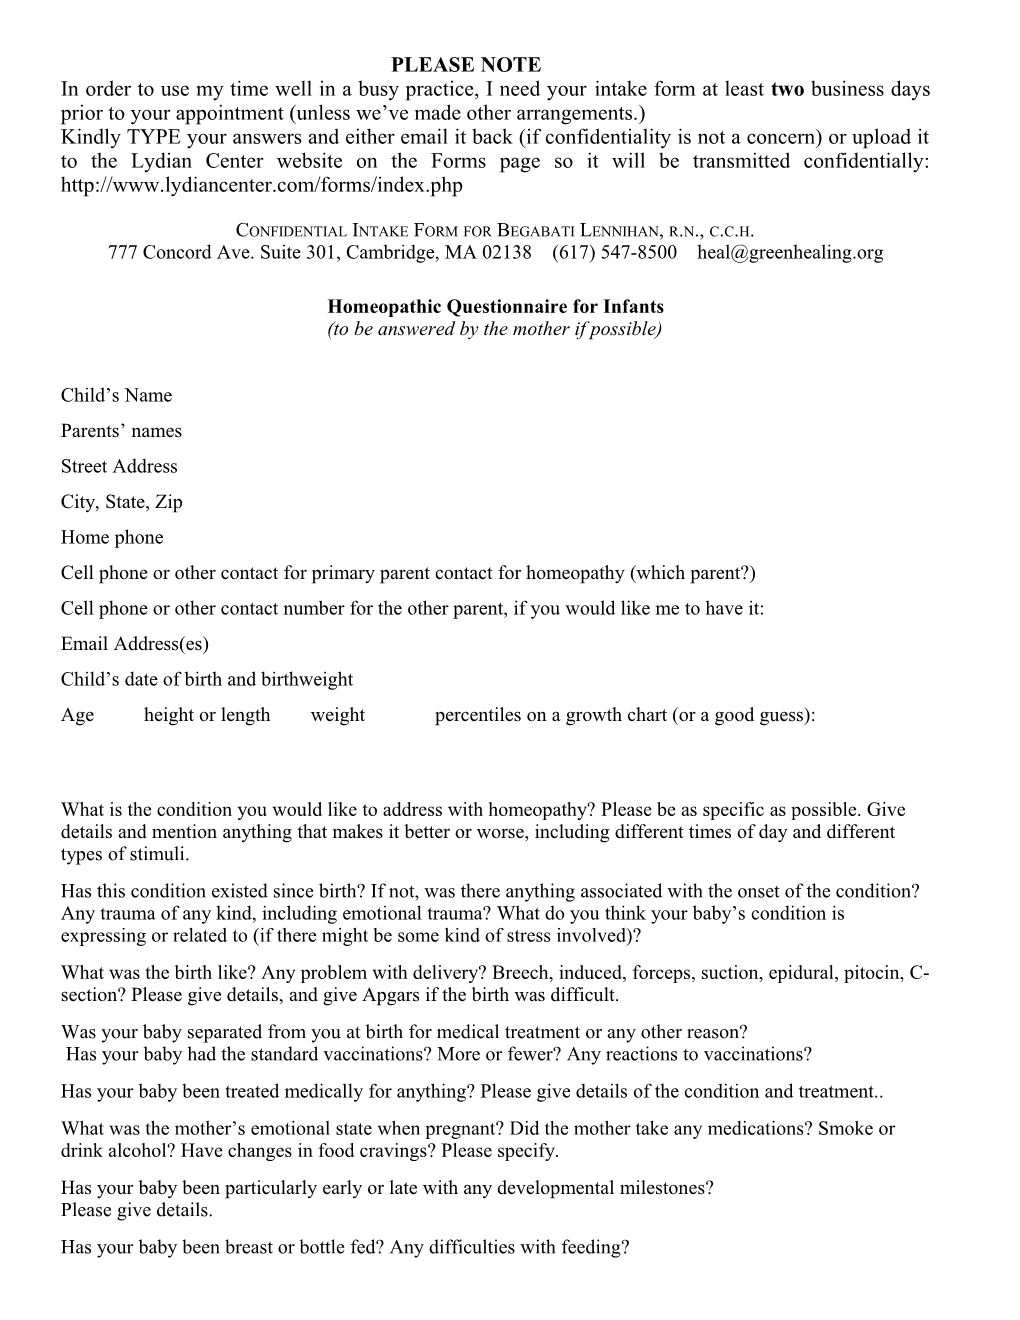 Confidential Intake Form for Begabati Lennihan, R.N., C.C.H